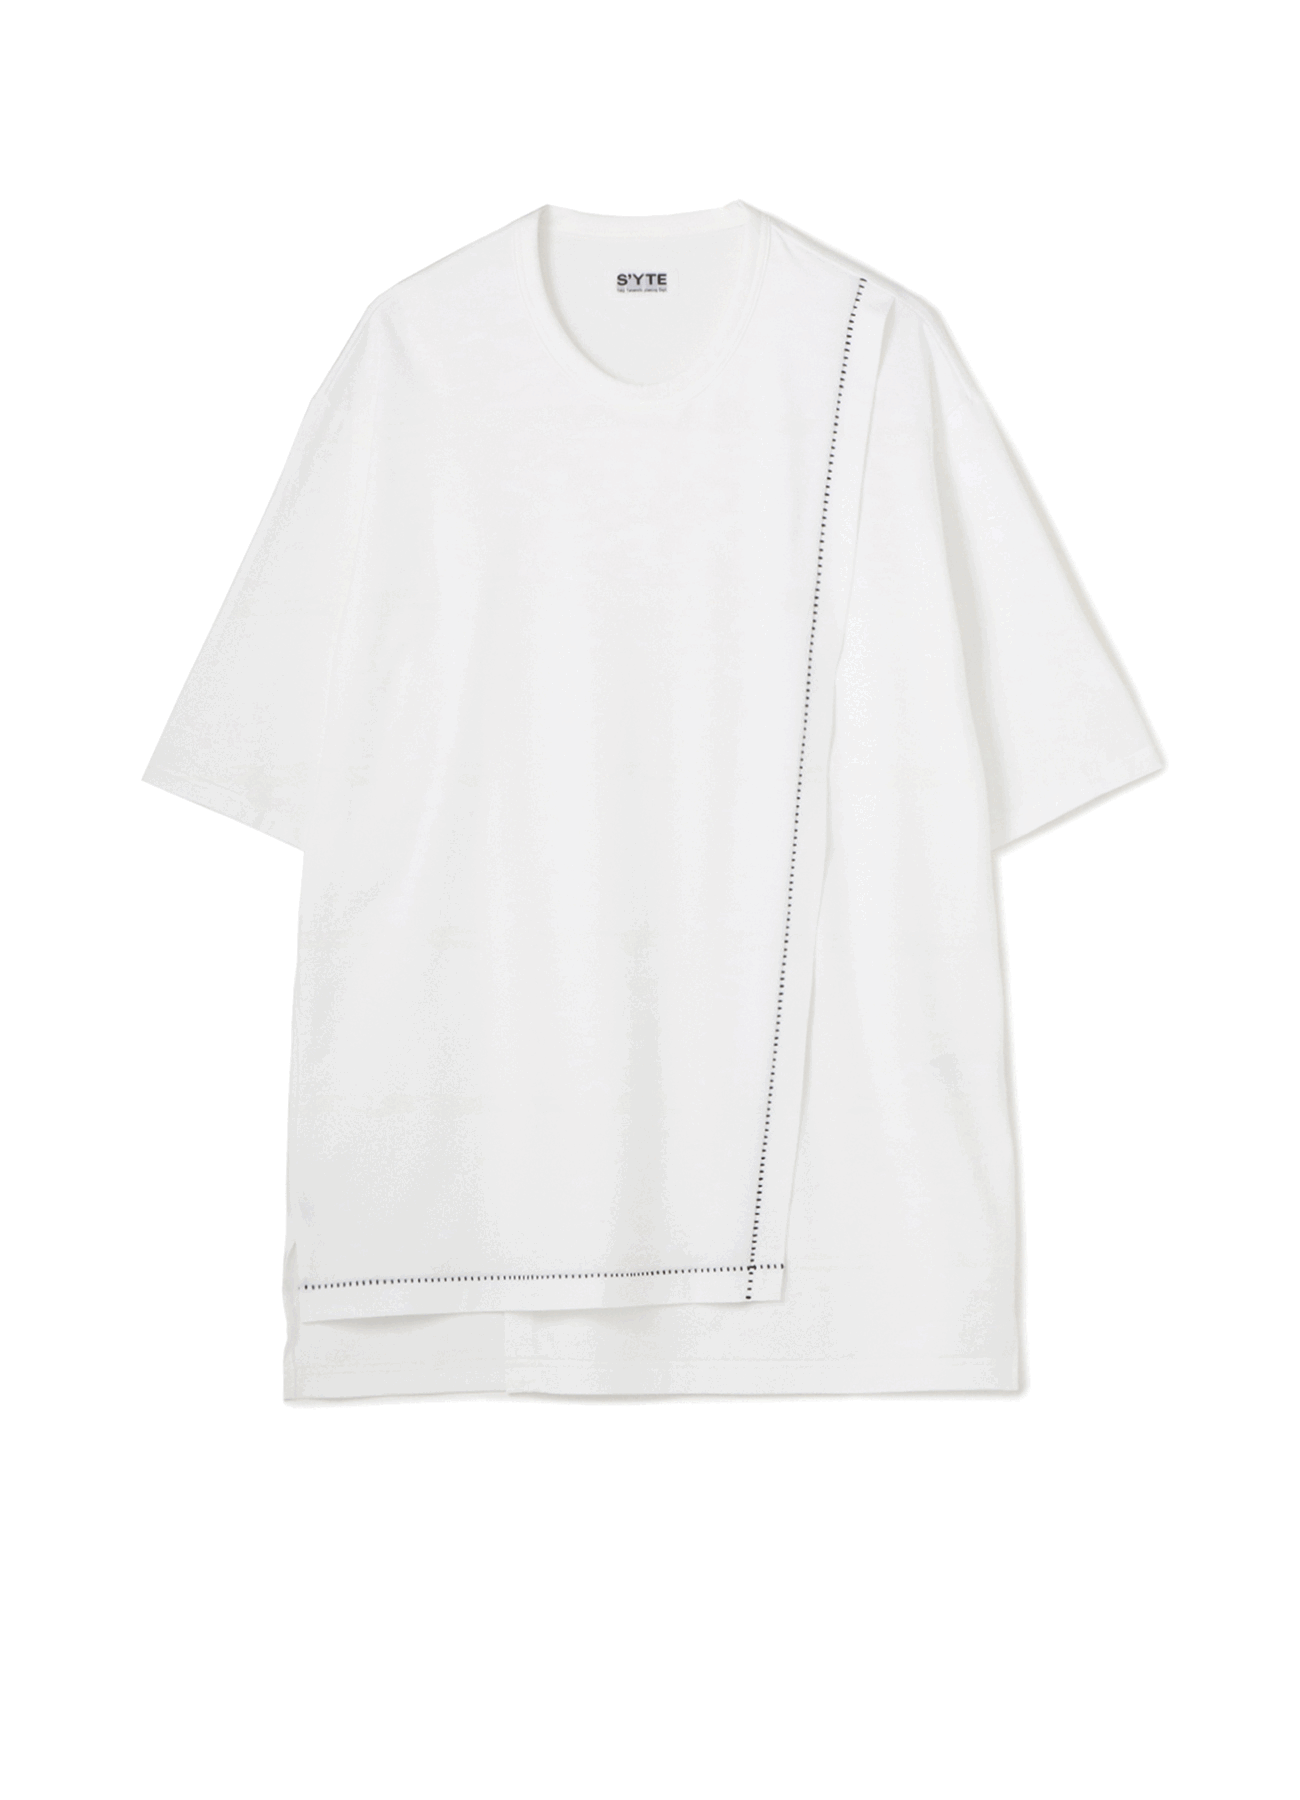 40/2 Cotton Jersey Crew Neck Half-Layered Color Blind Stitch Short Sleeve T-Shirt